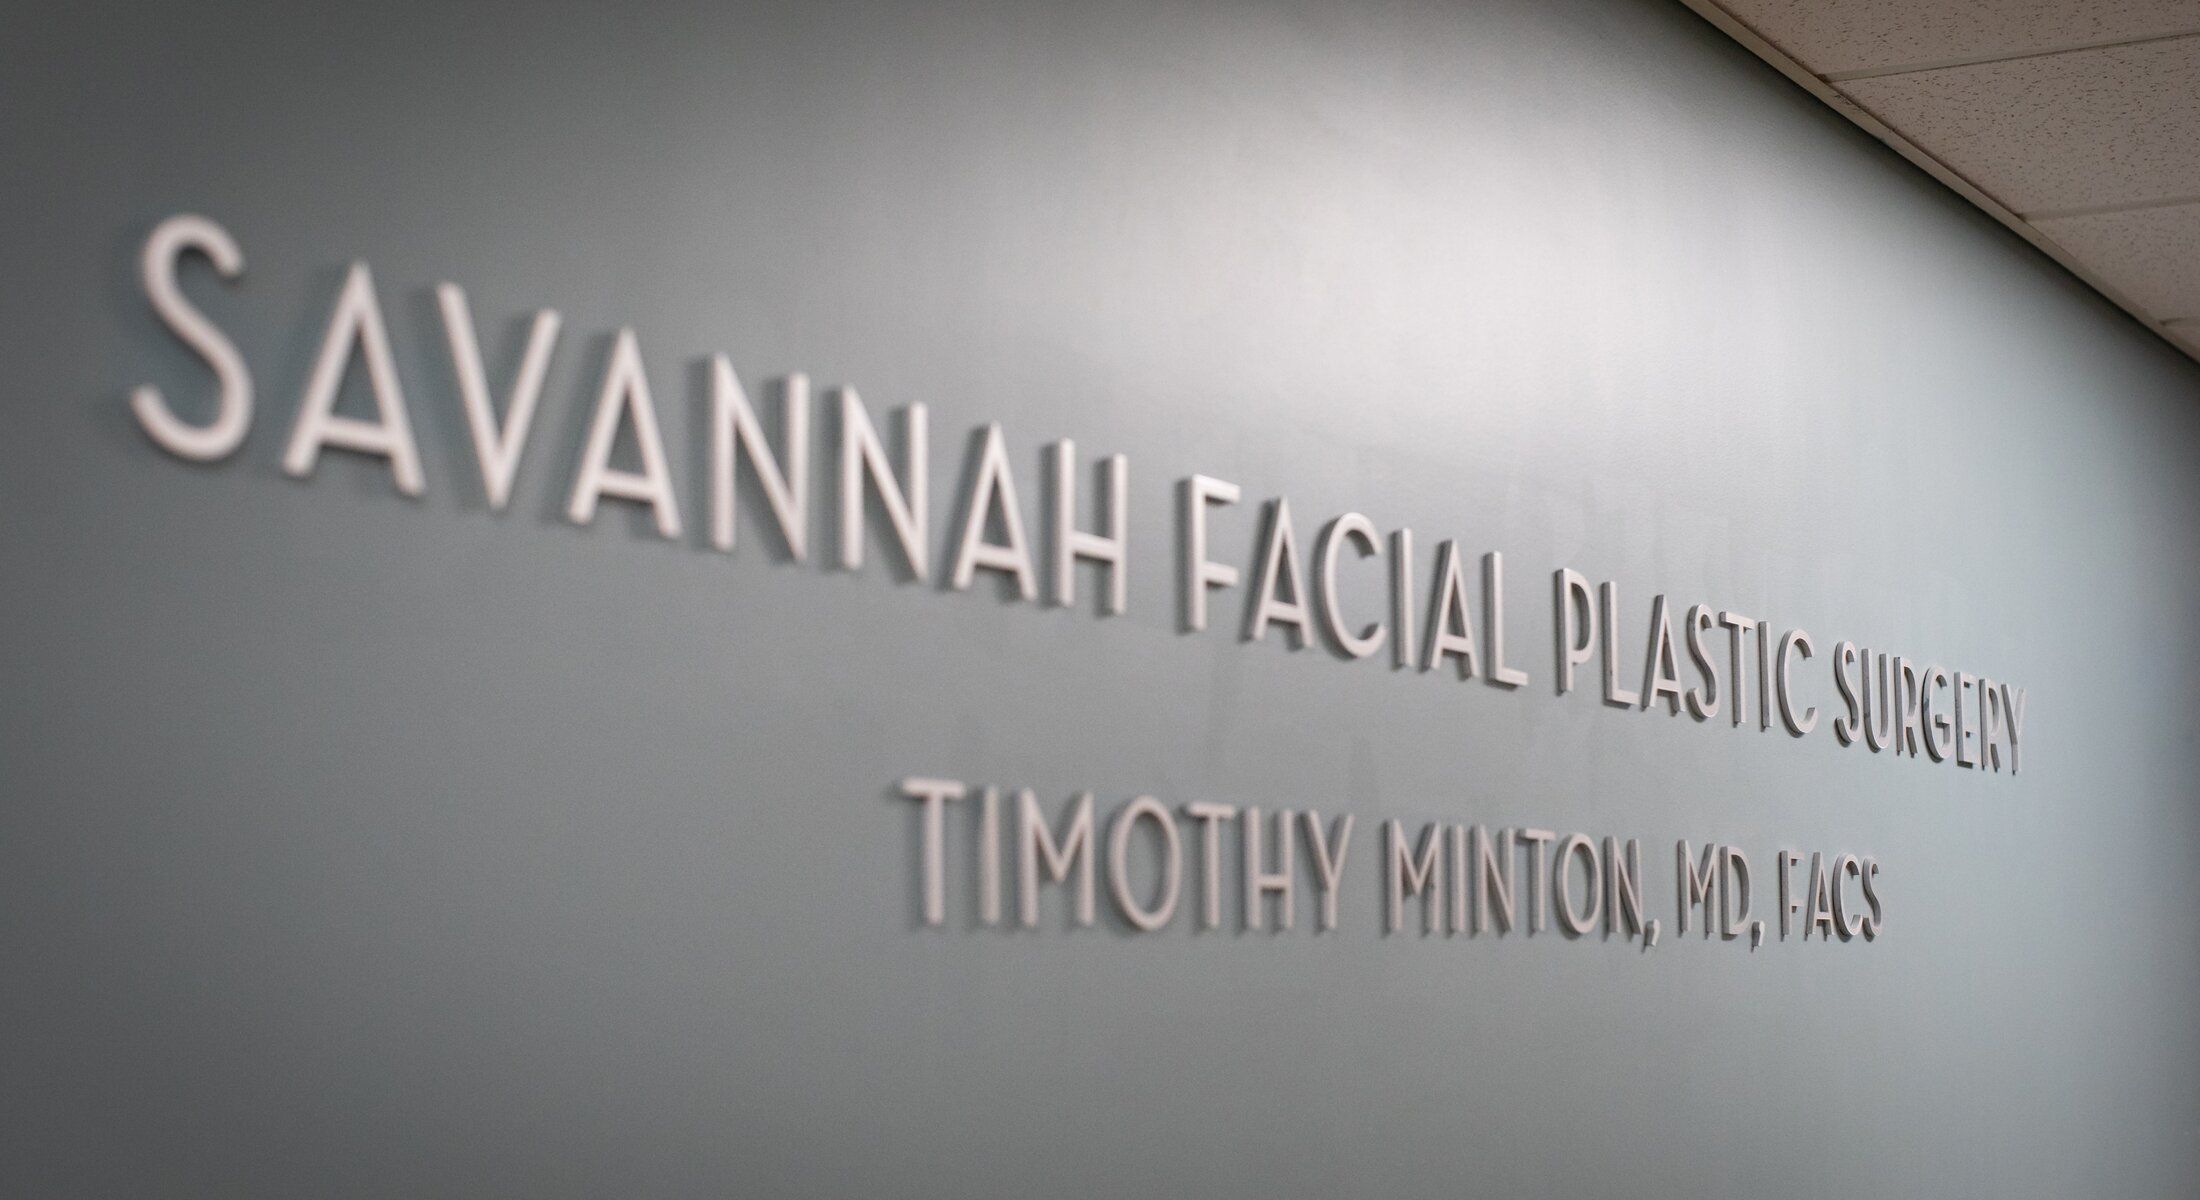 savannah facial plastic surgery sign